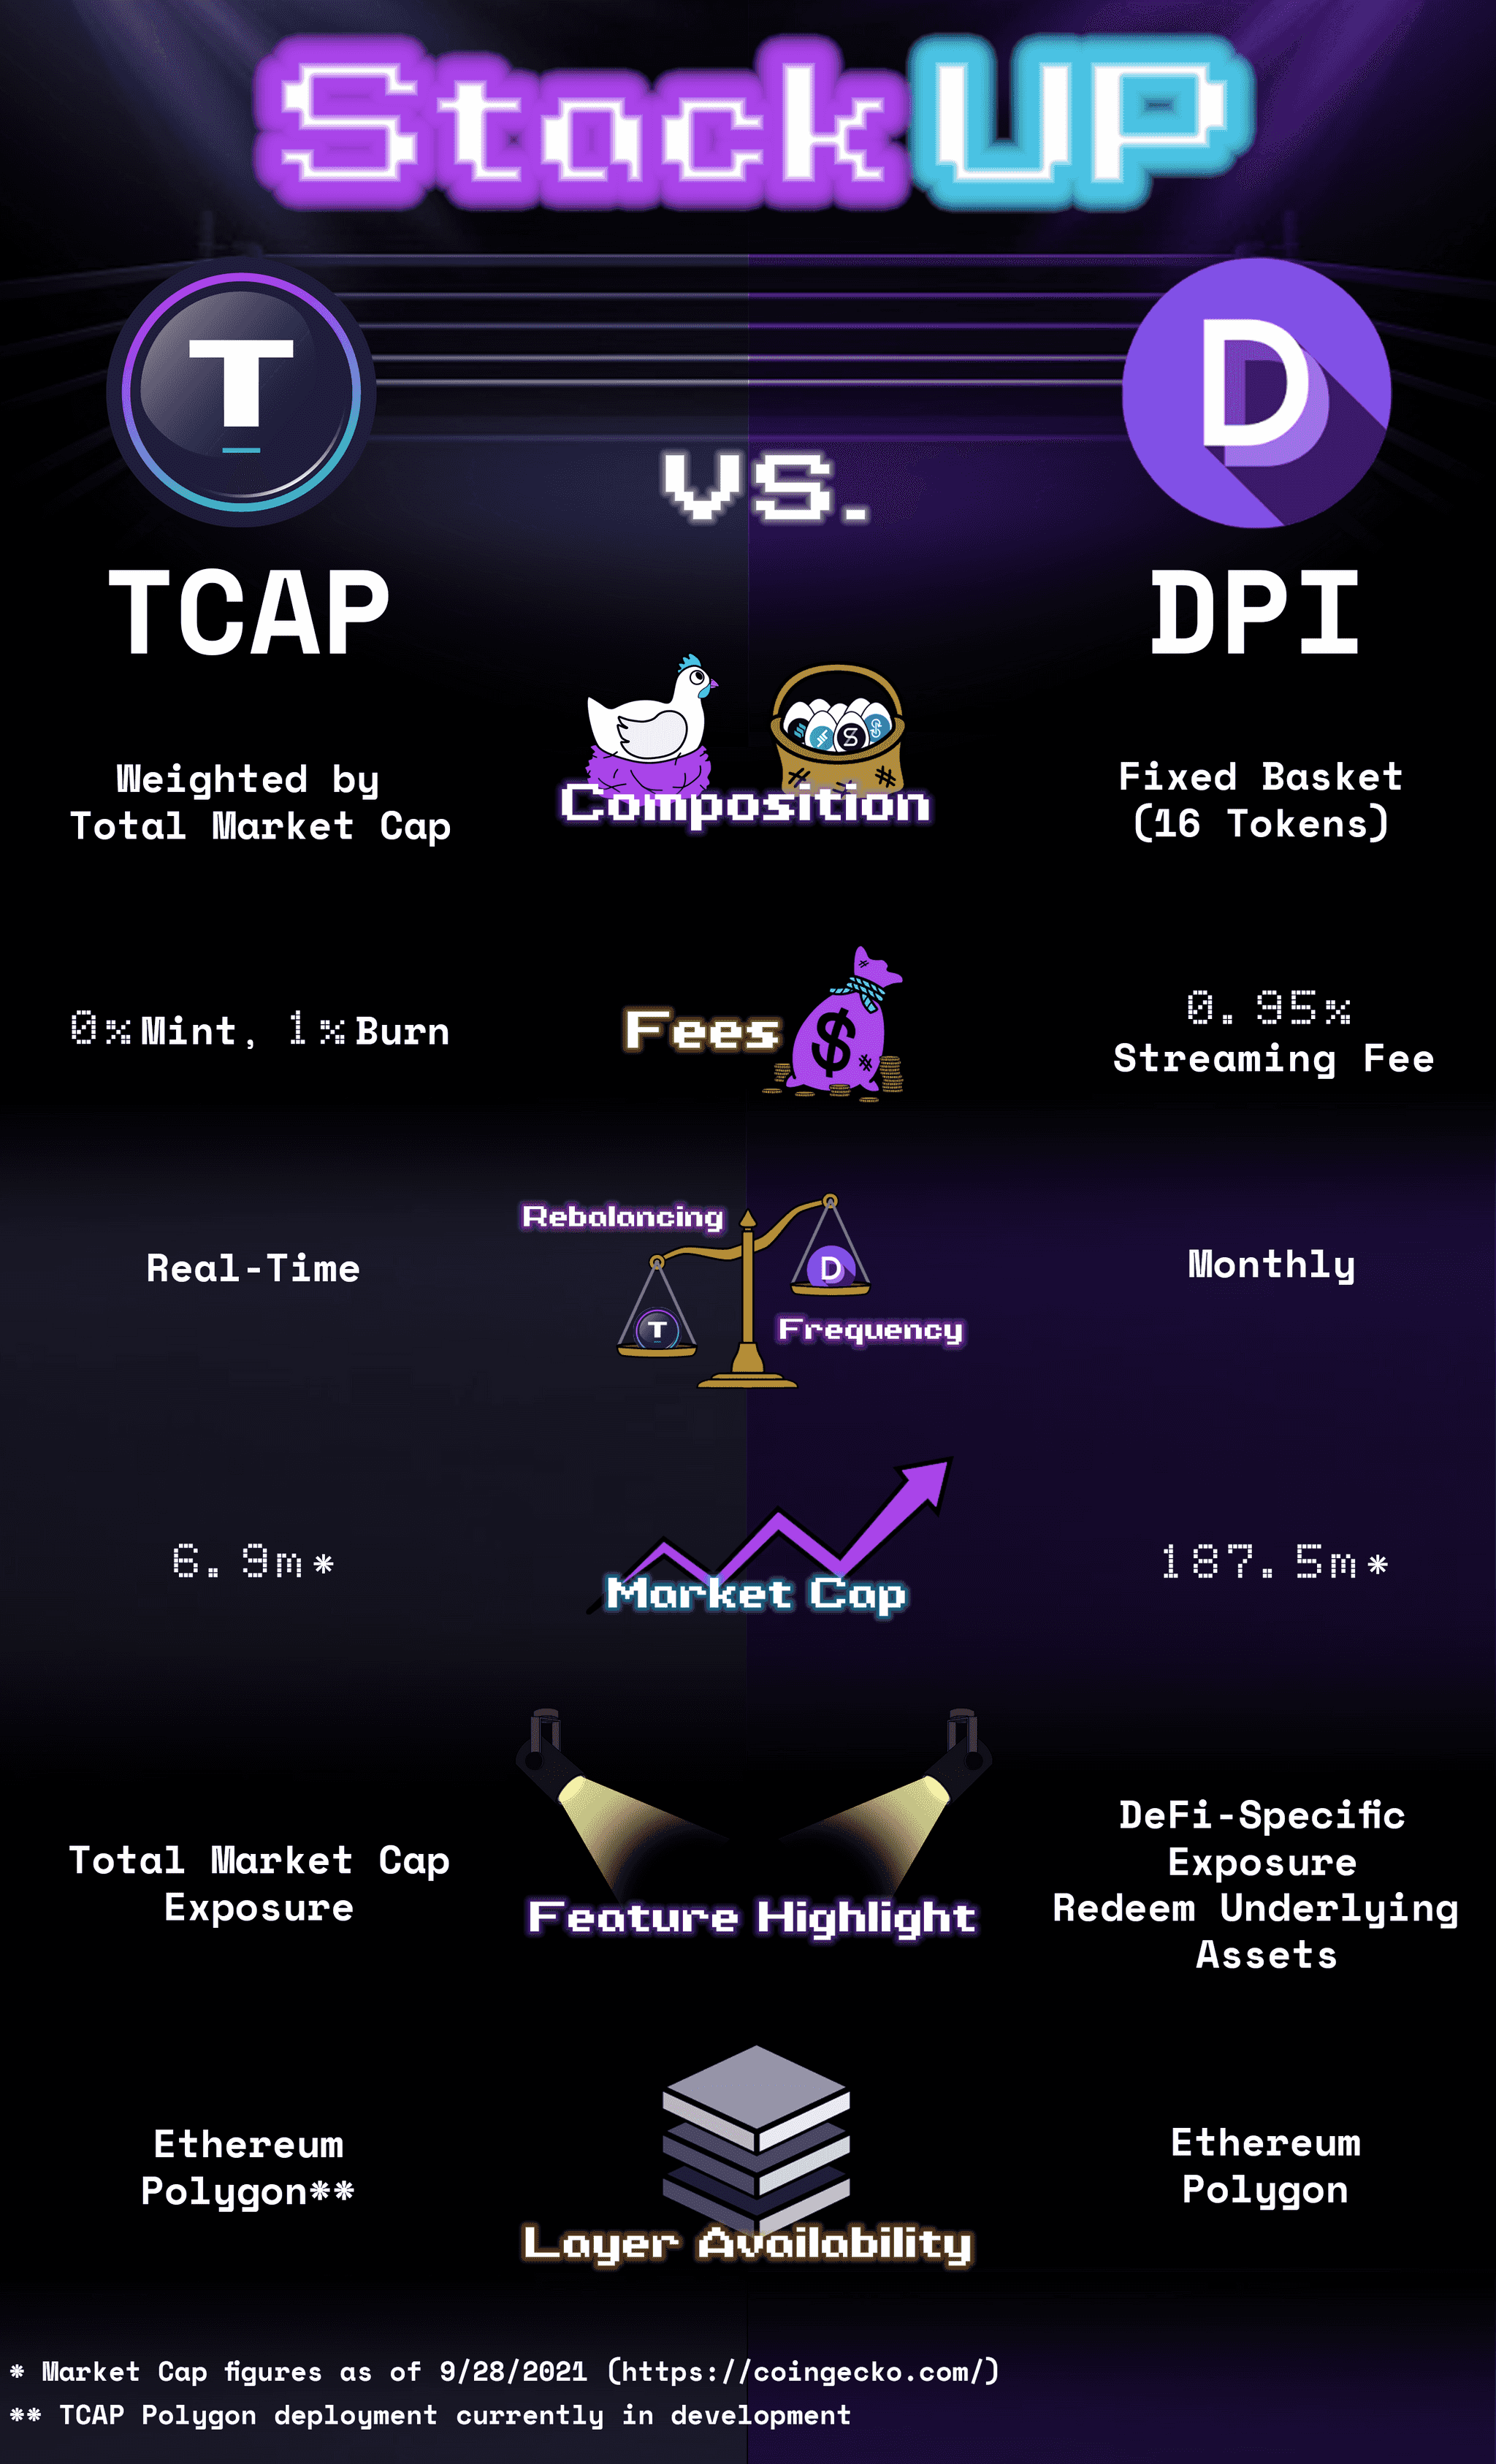 DPI-TCAP StackUp